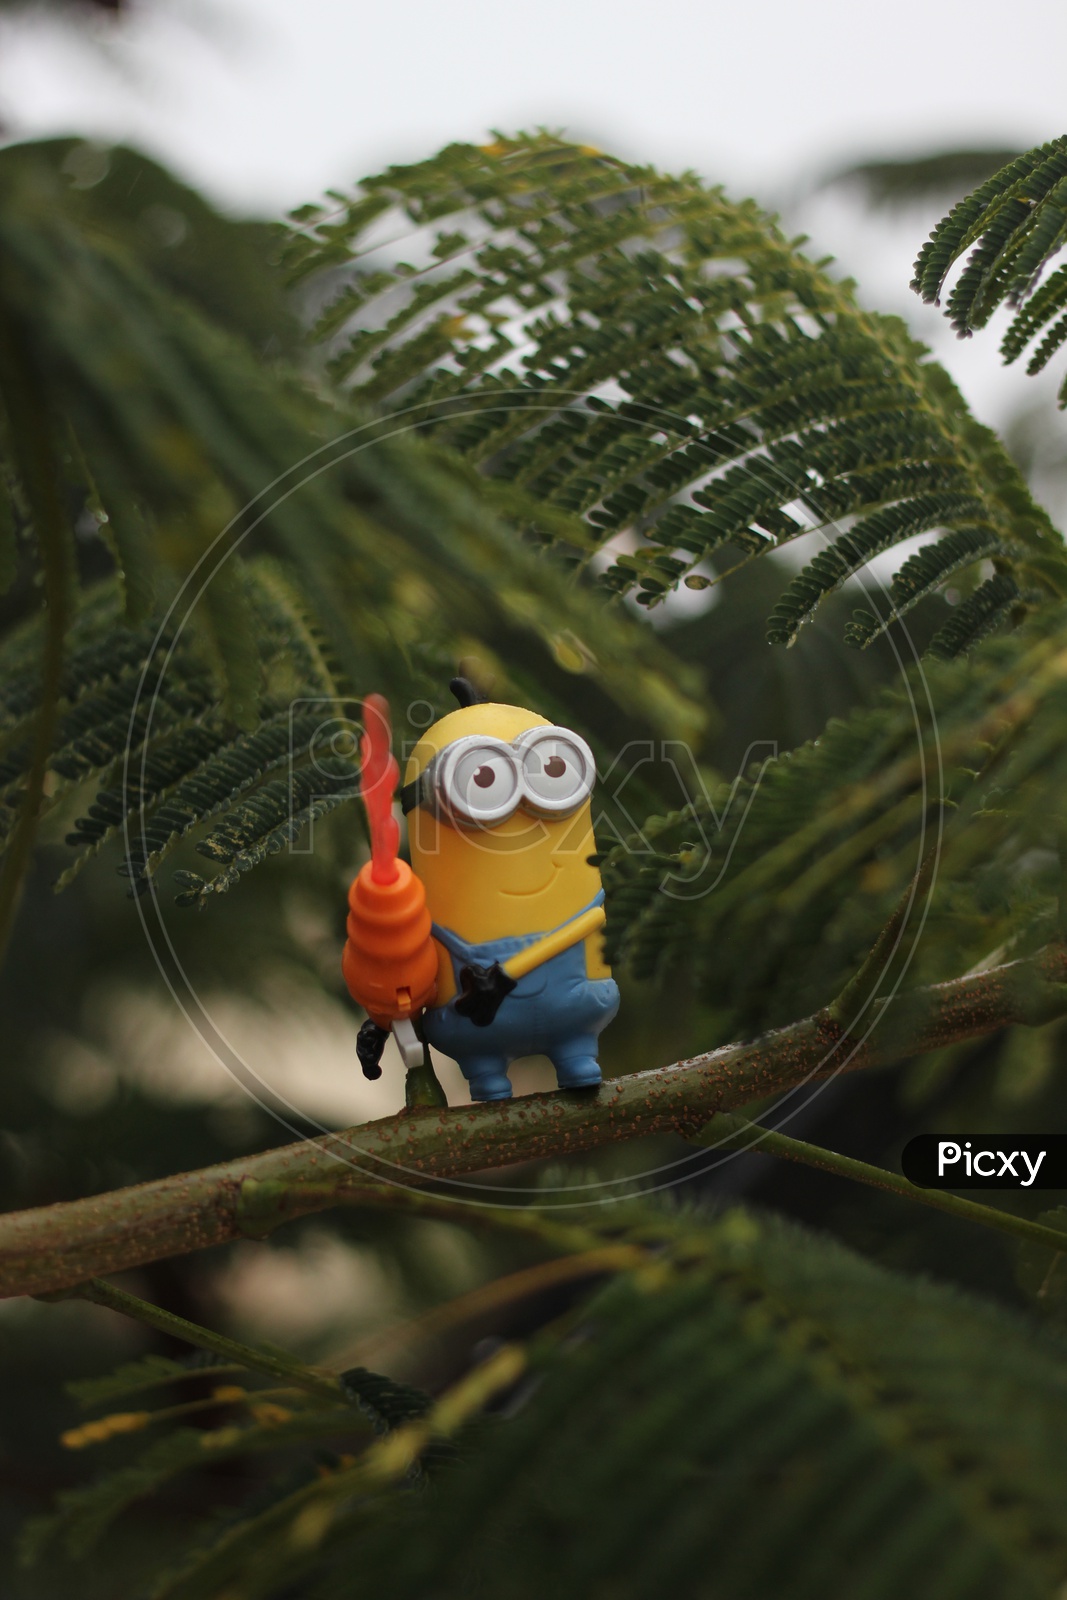 Toy Minion on the tree